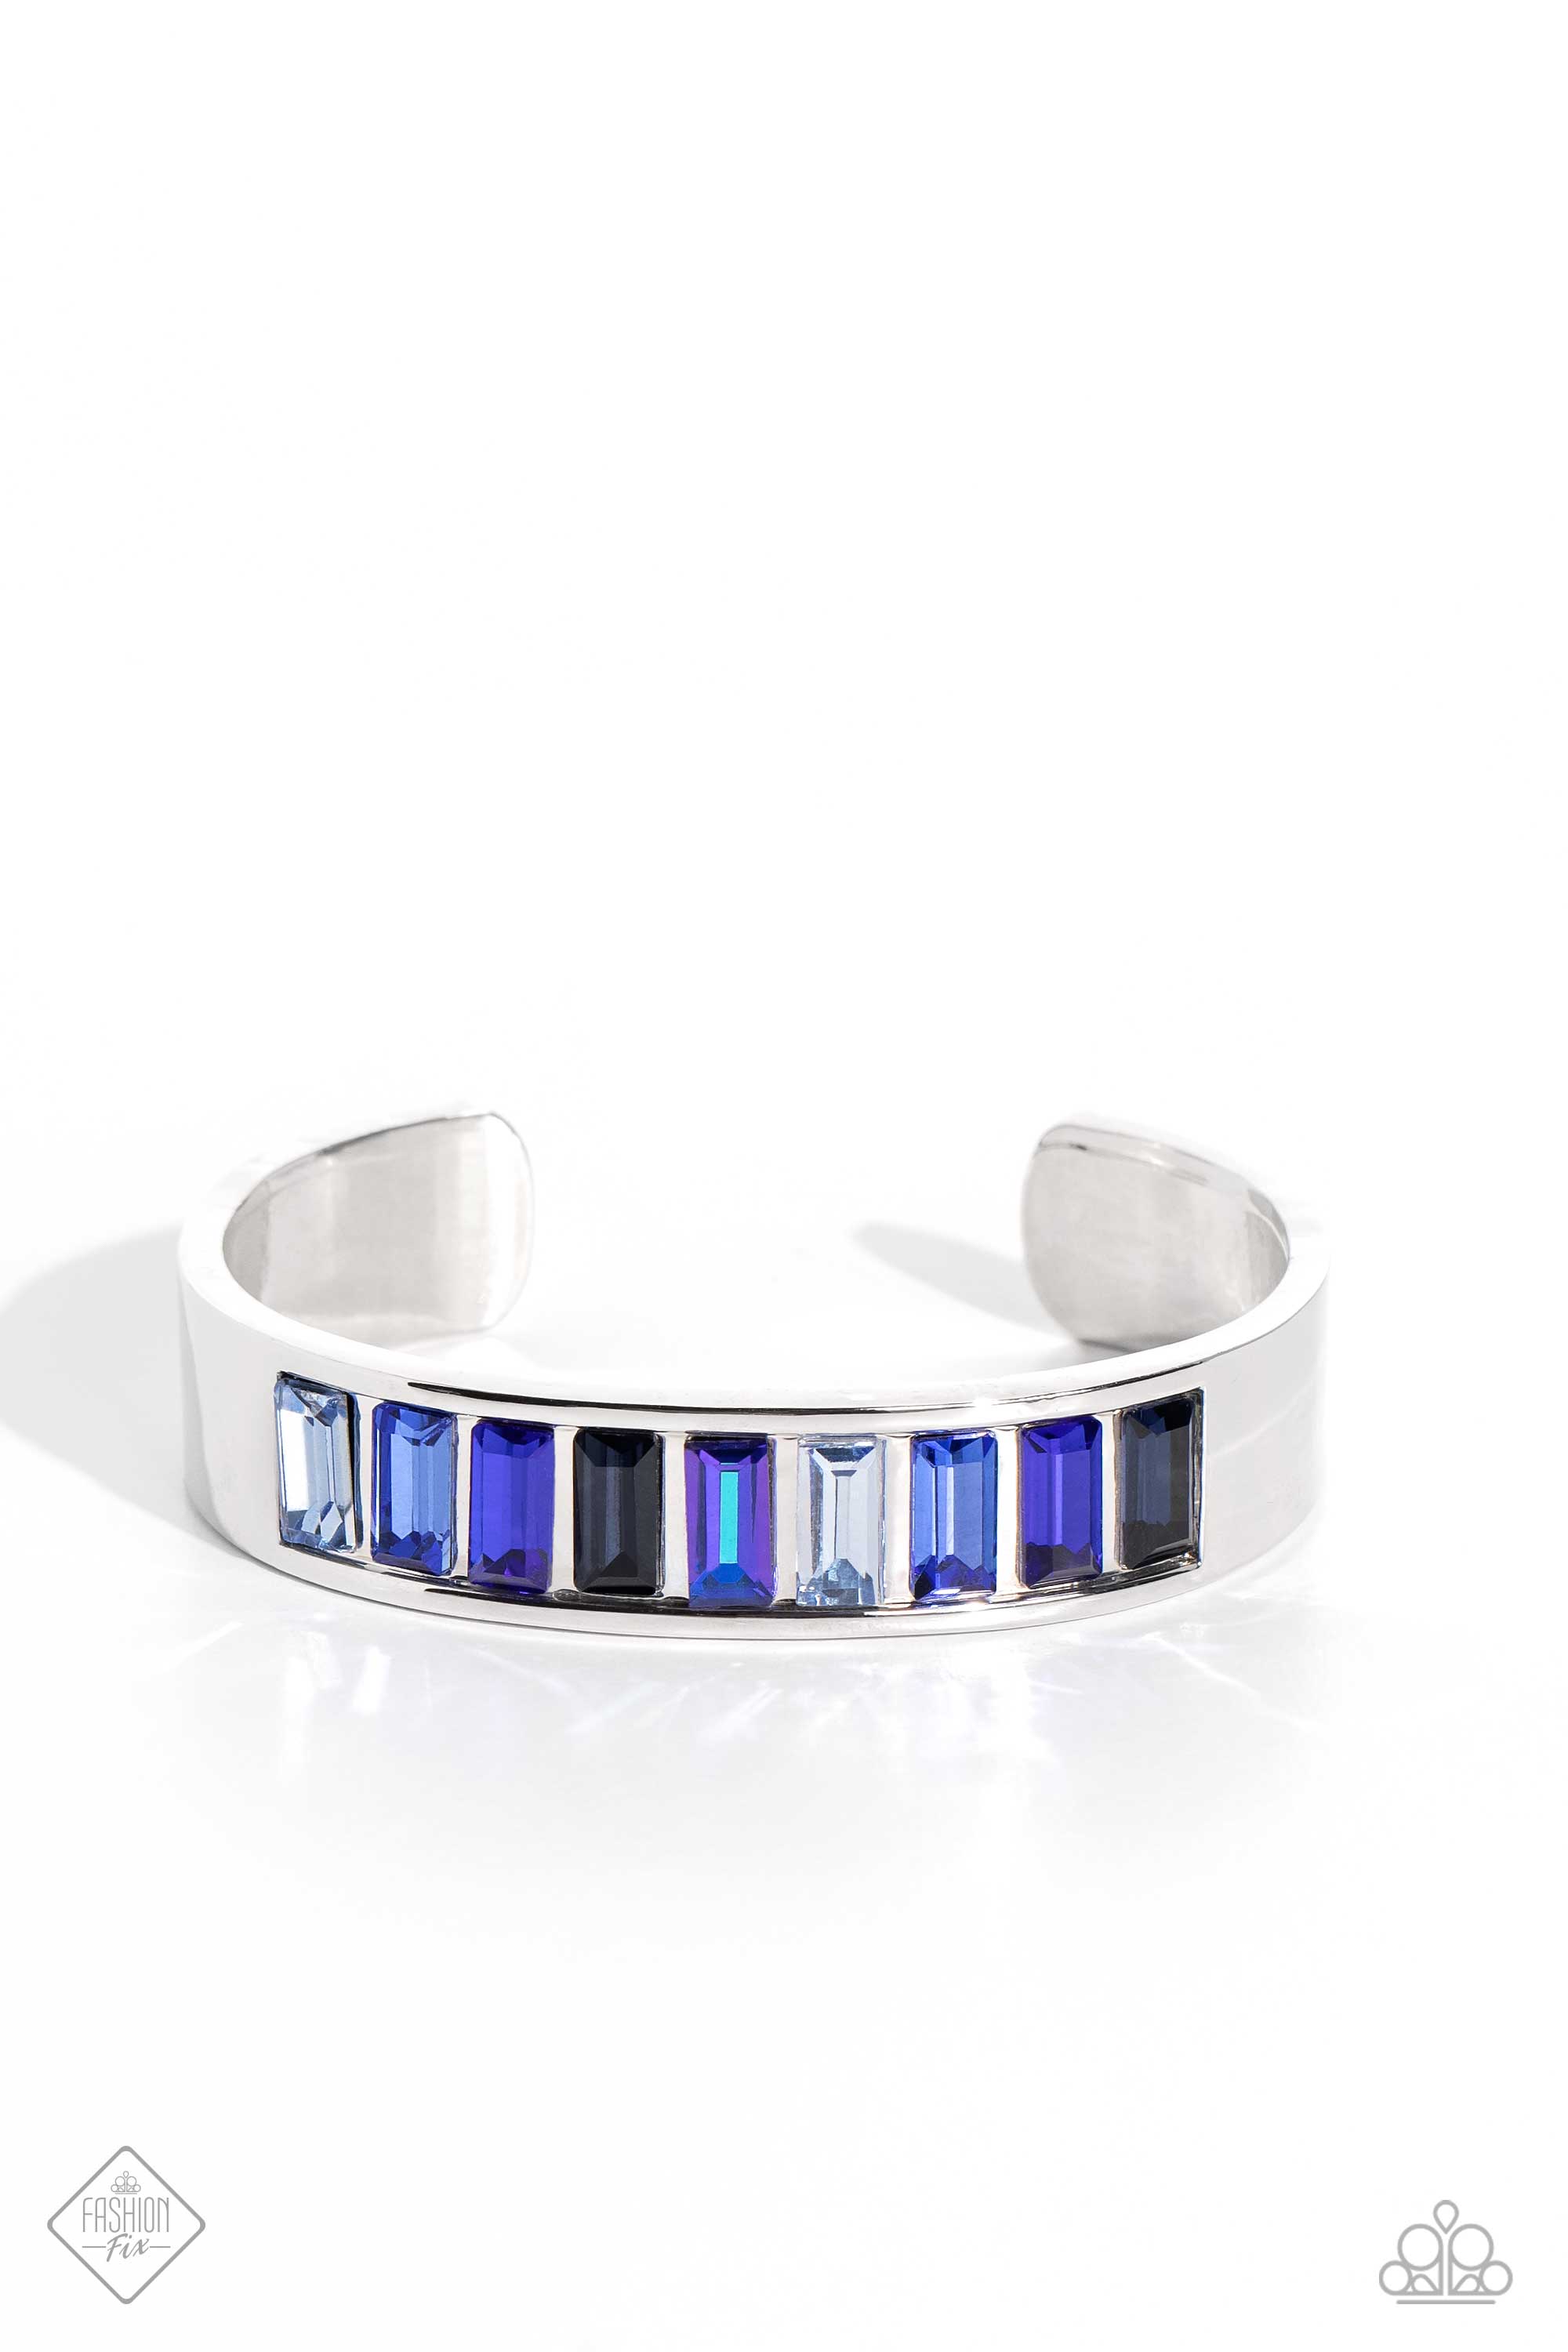 Practiced Poise Blue Rhinestone Cuff Bracelet - Paparazzi Accessories- lightbox - CarasShop.com - $5 Jewelry by Cara Jewels